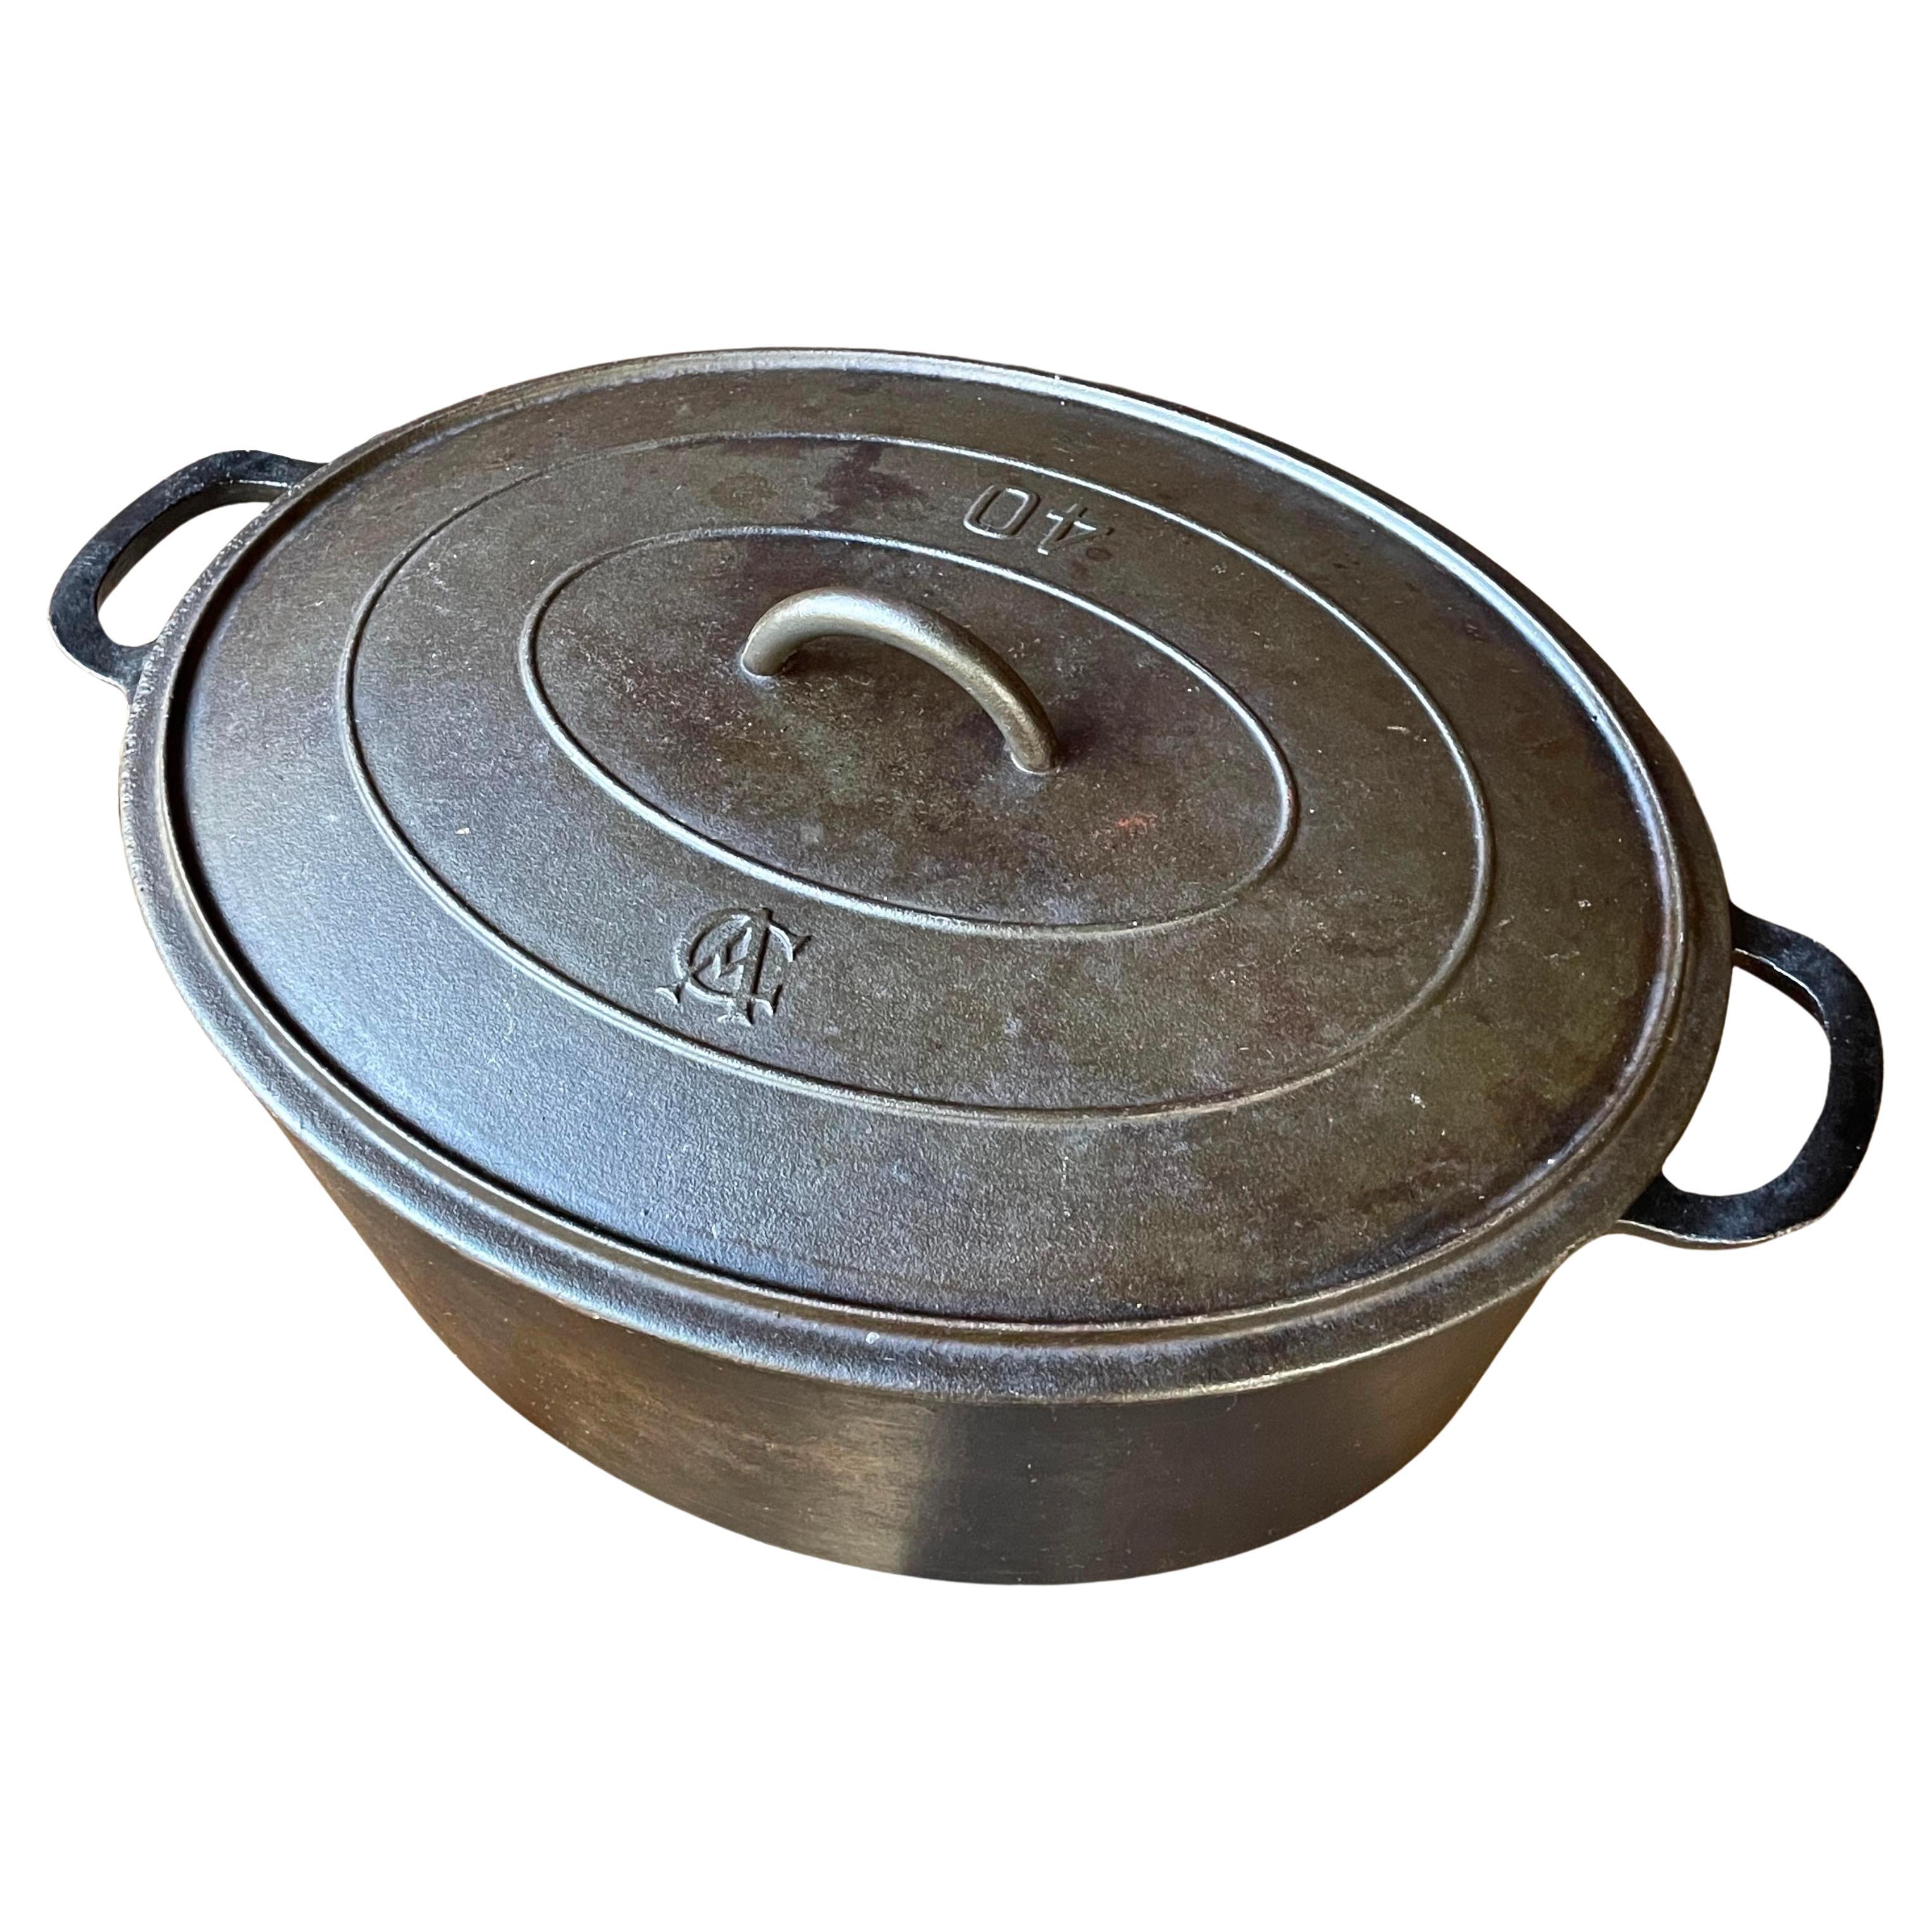 Vintage 1920s 1930s No. 14 Cast Iron Chuckwagon Dutch Oven Cook Pot 3  Trivet Feet, Coal Lid and Bail Handle Seasoned & Functional 